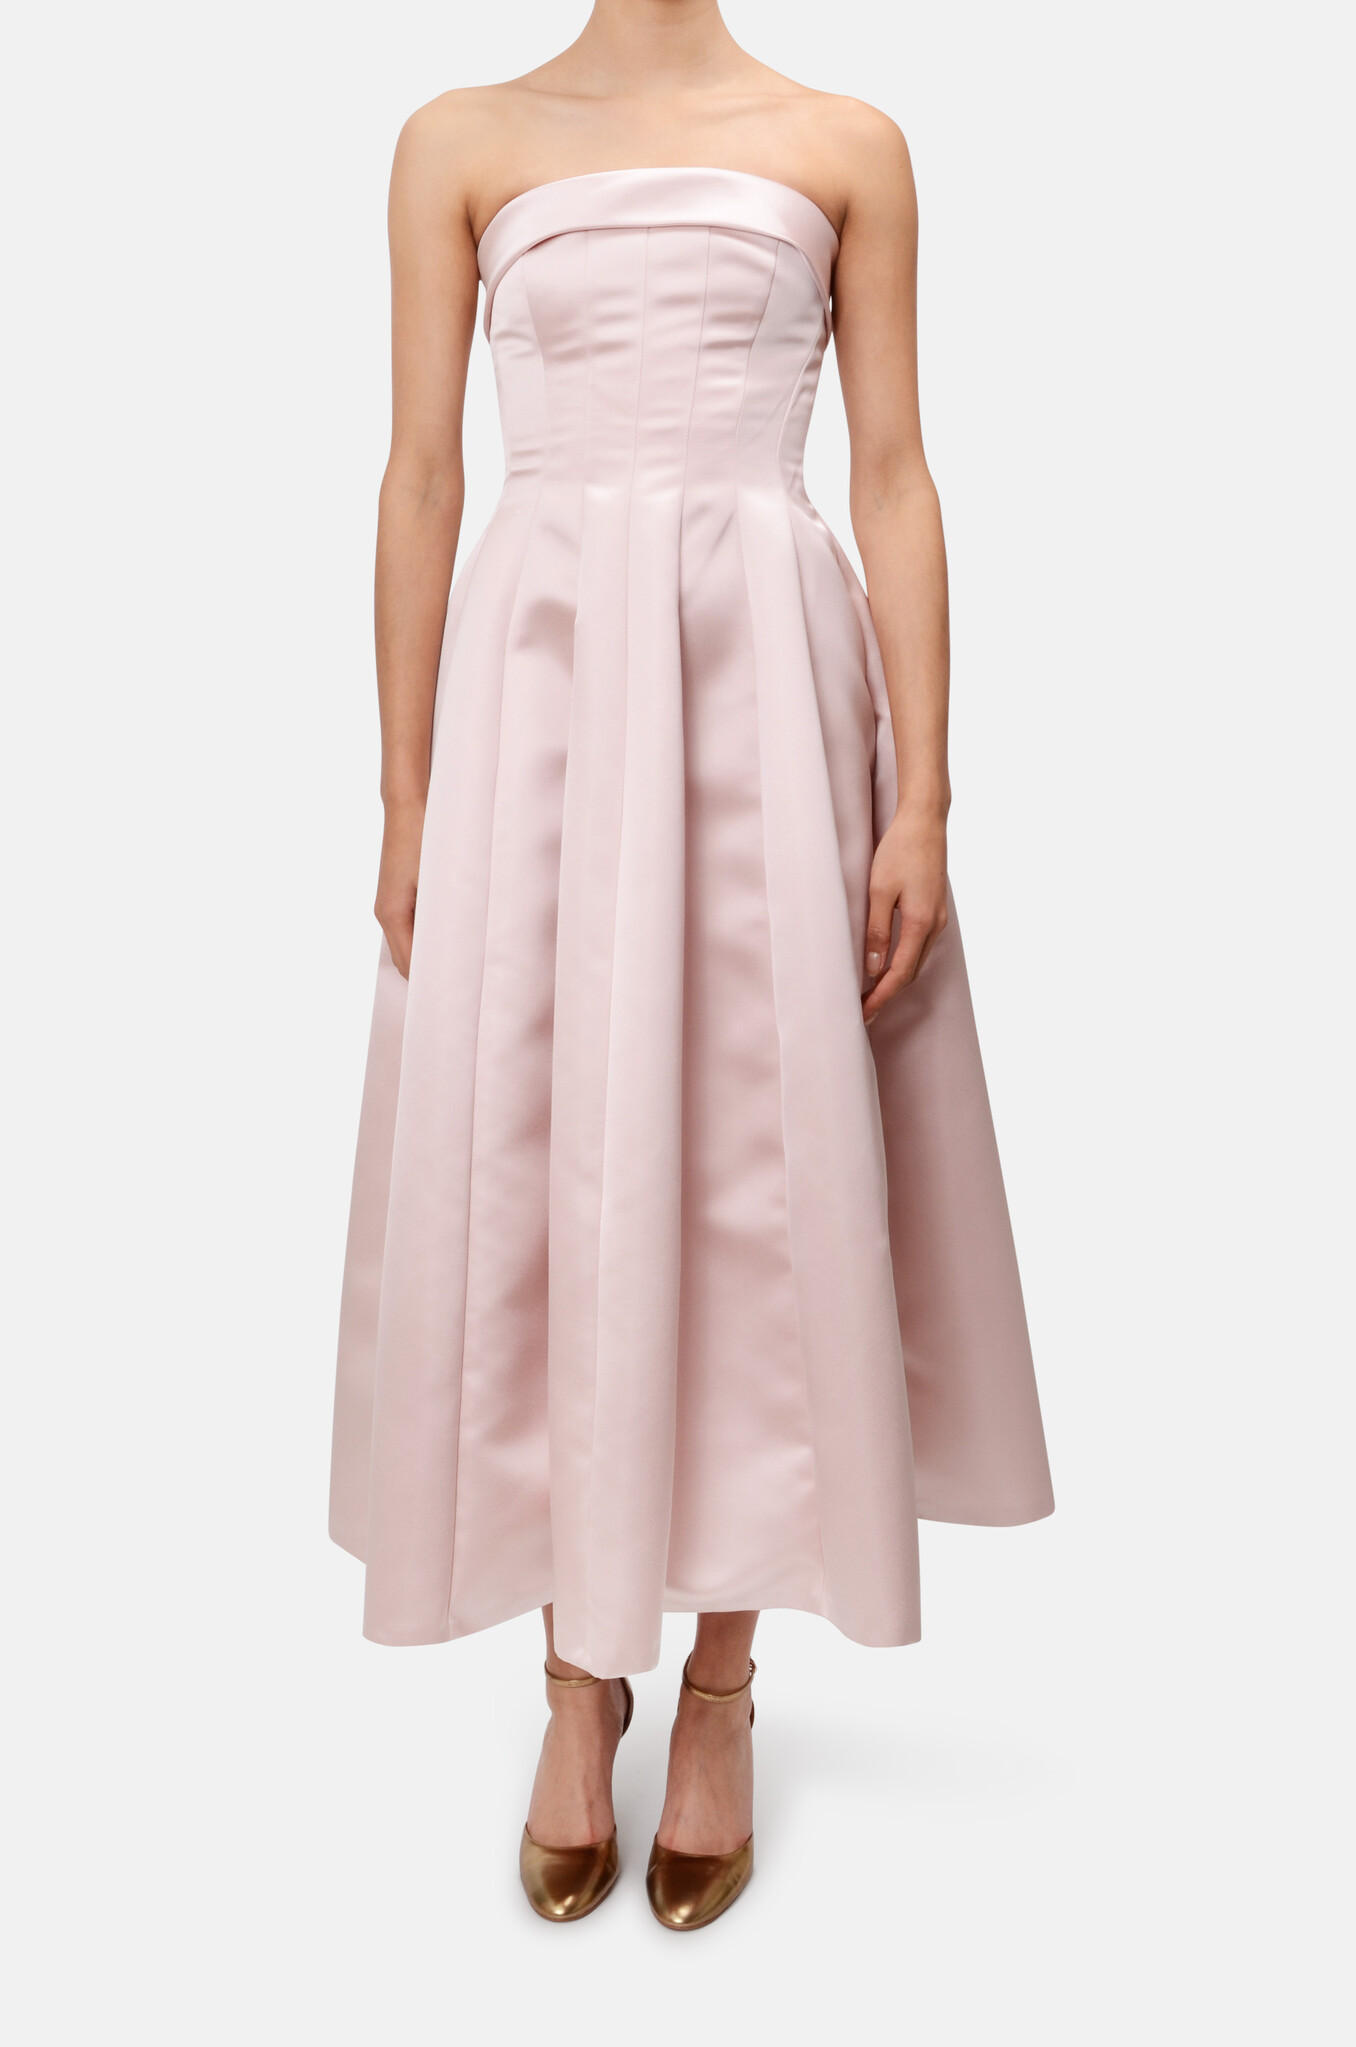 Duchesse Bustier Dress in Confetti Pink-1